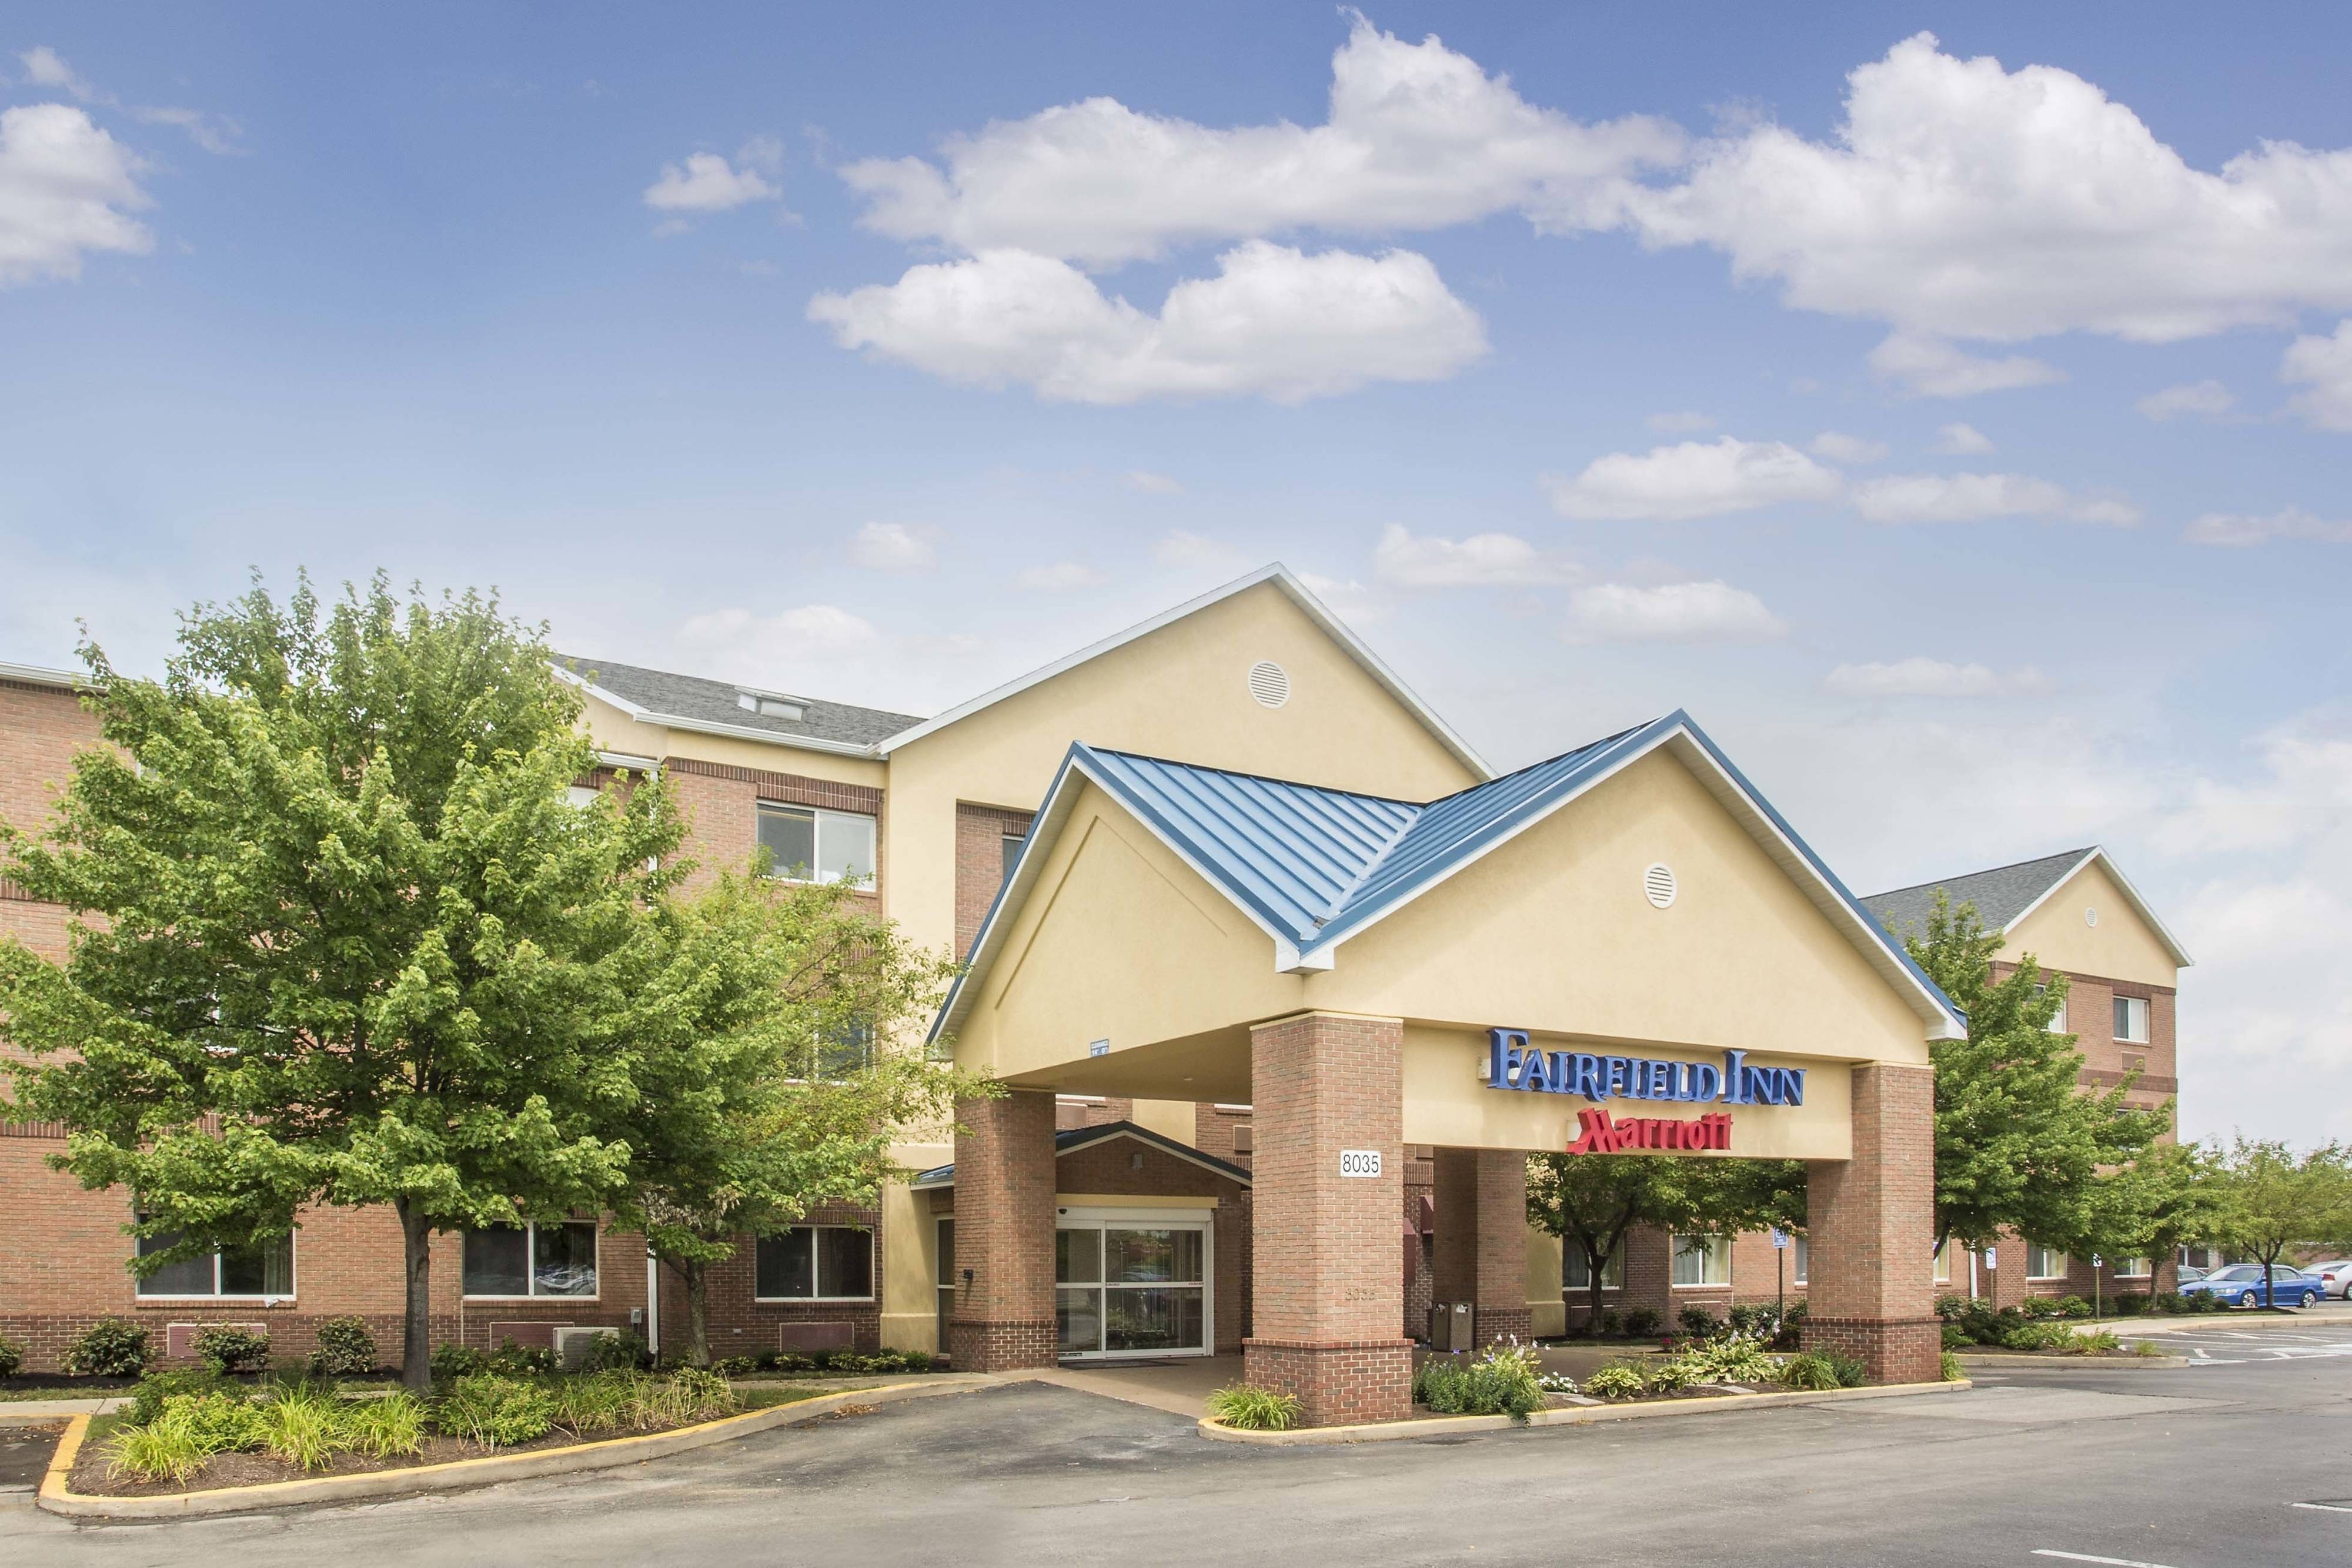 Photo of Fairfield Inn & Suites by Marriott Dayton South, Dayton, OH